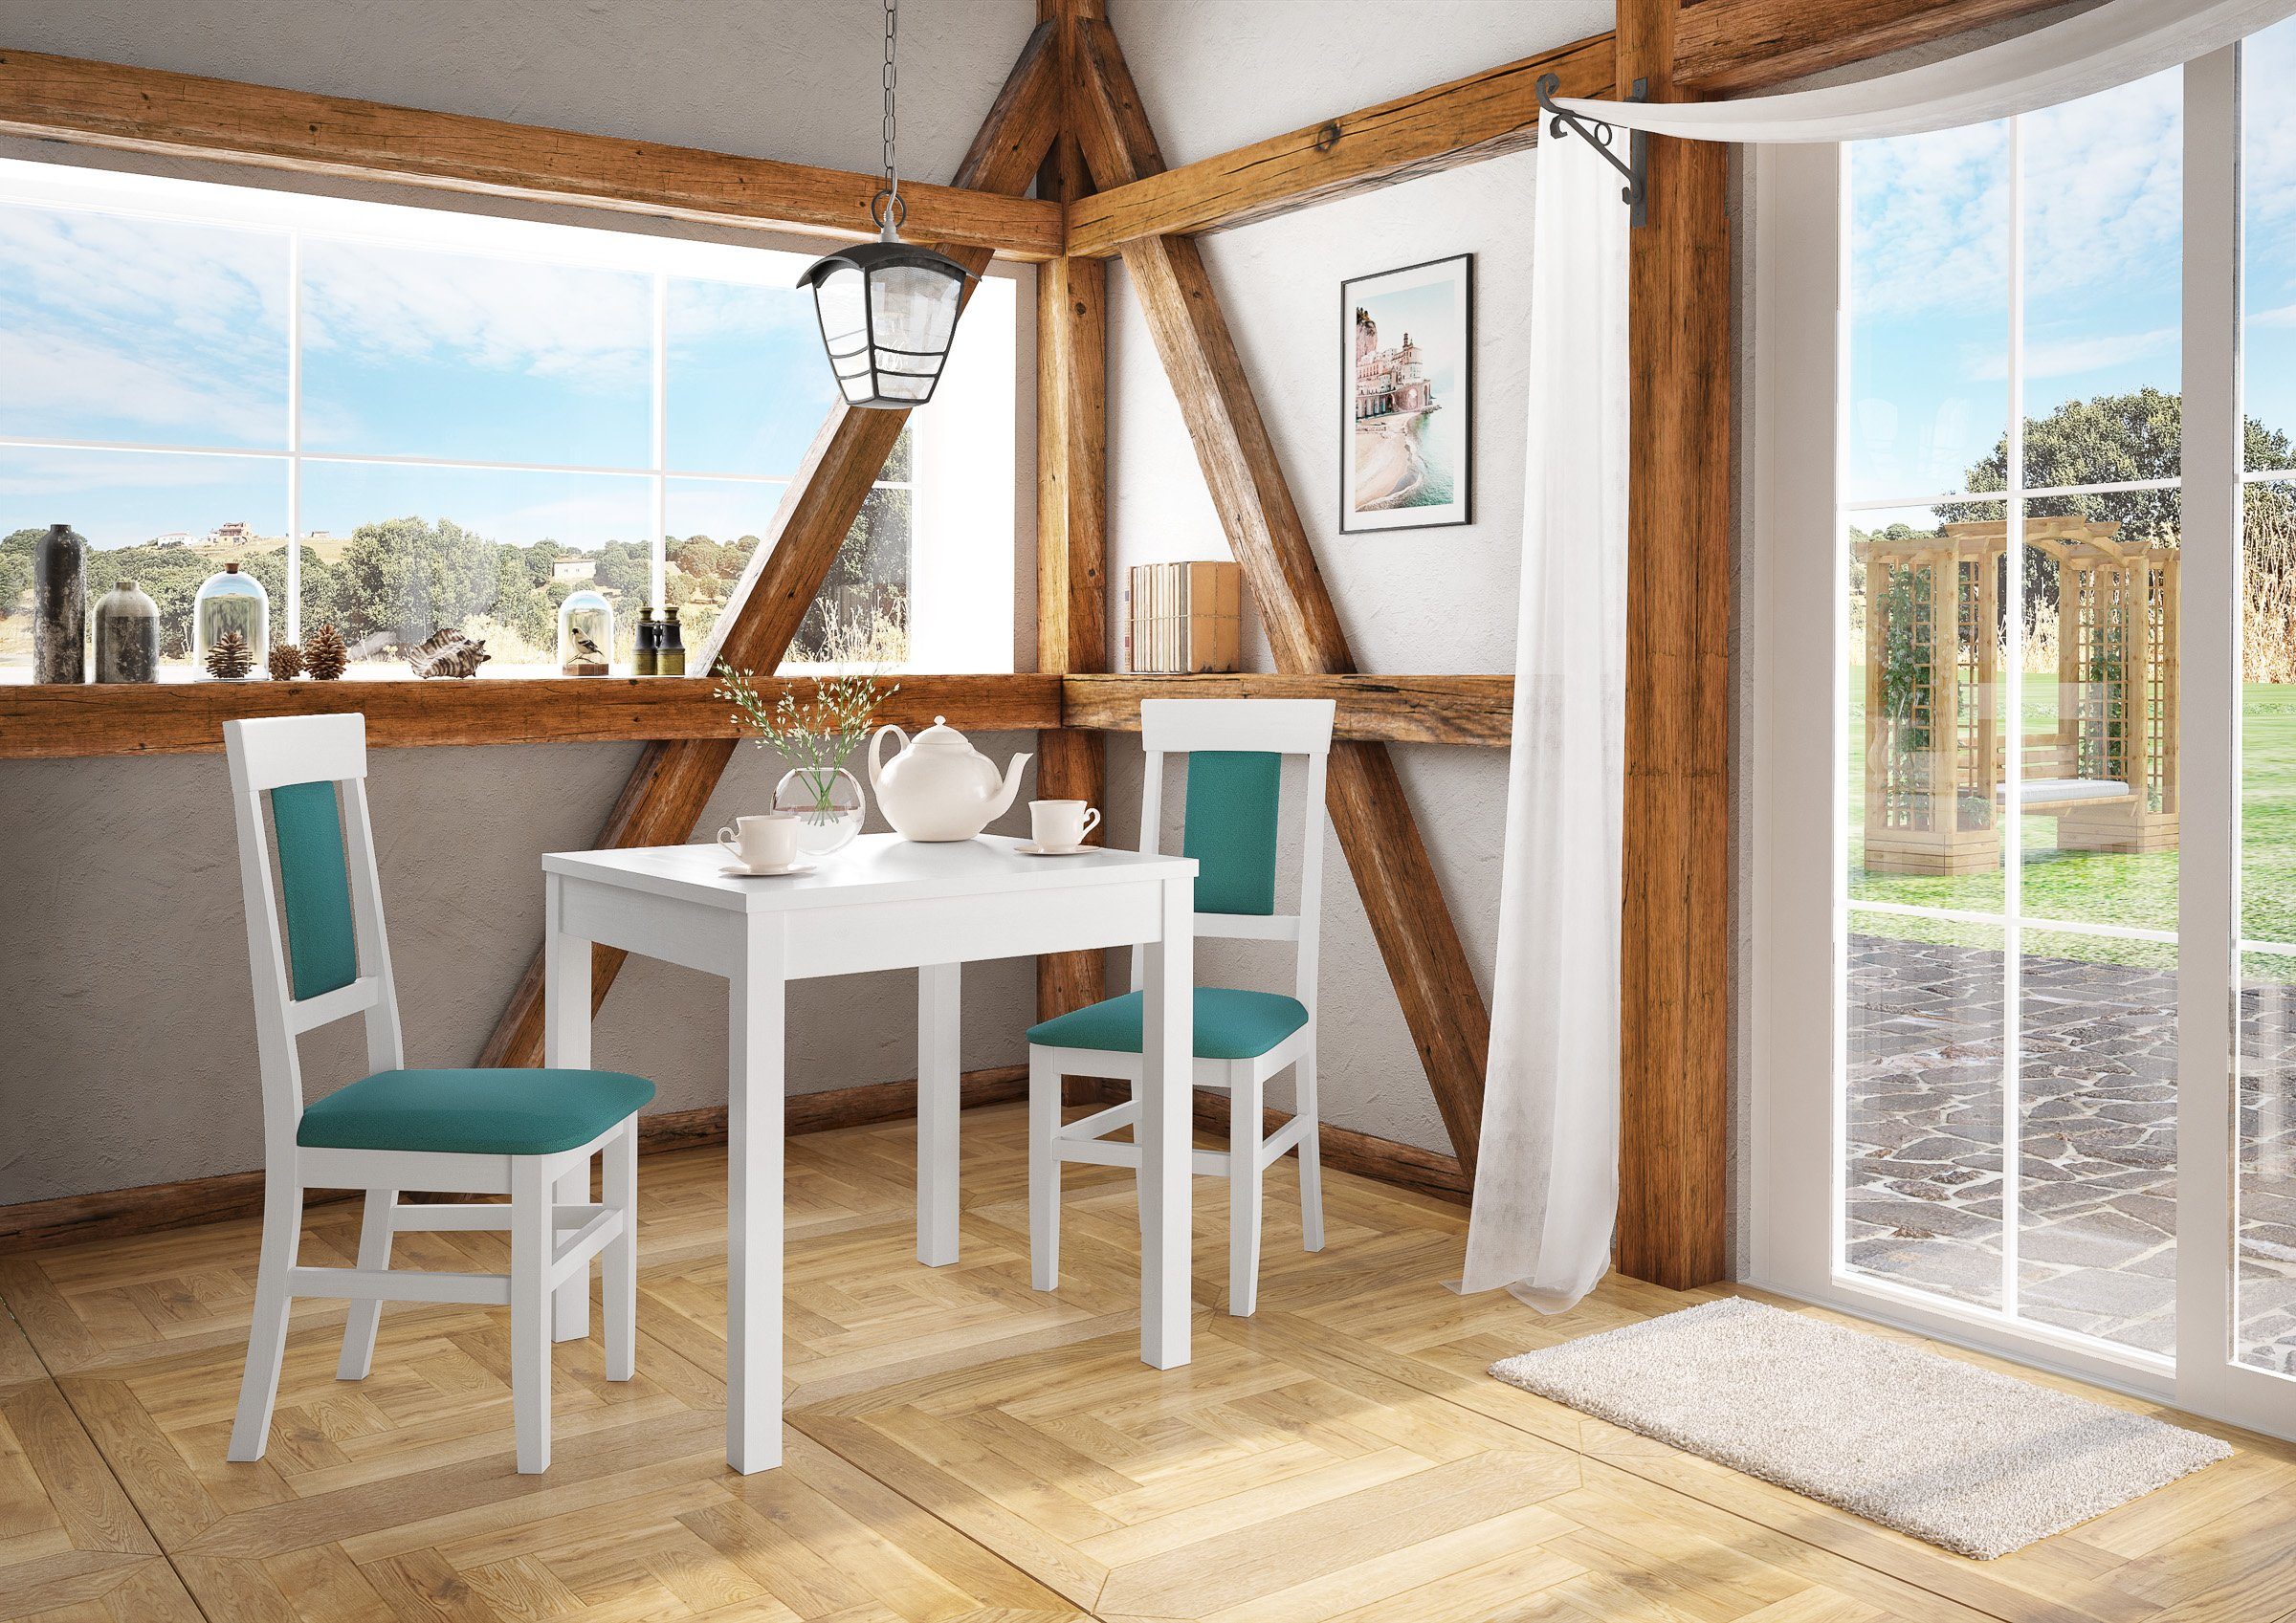 Massivholz-Stuhl Farbe türkis ERST-HOLZ Küchenstuhl Gepolsterter Esszimmerstuhl Esszimmerstuhl